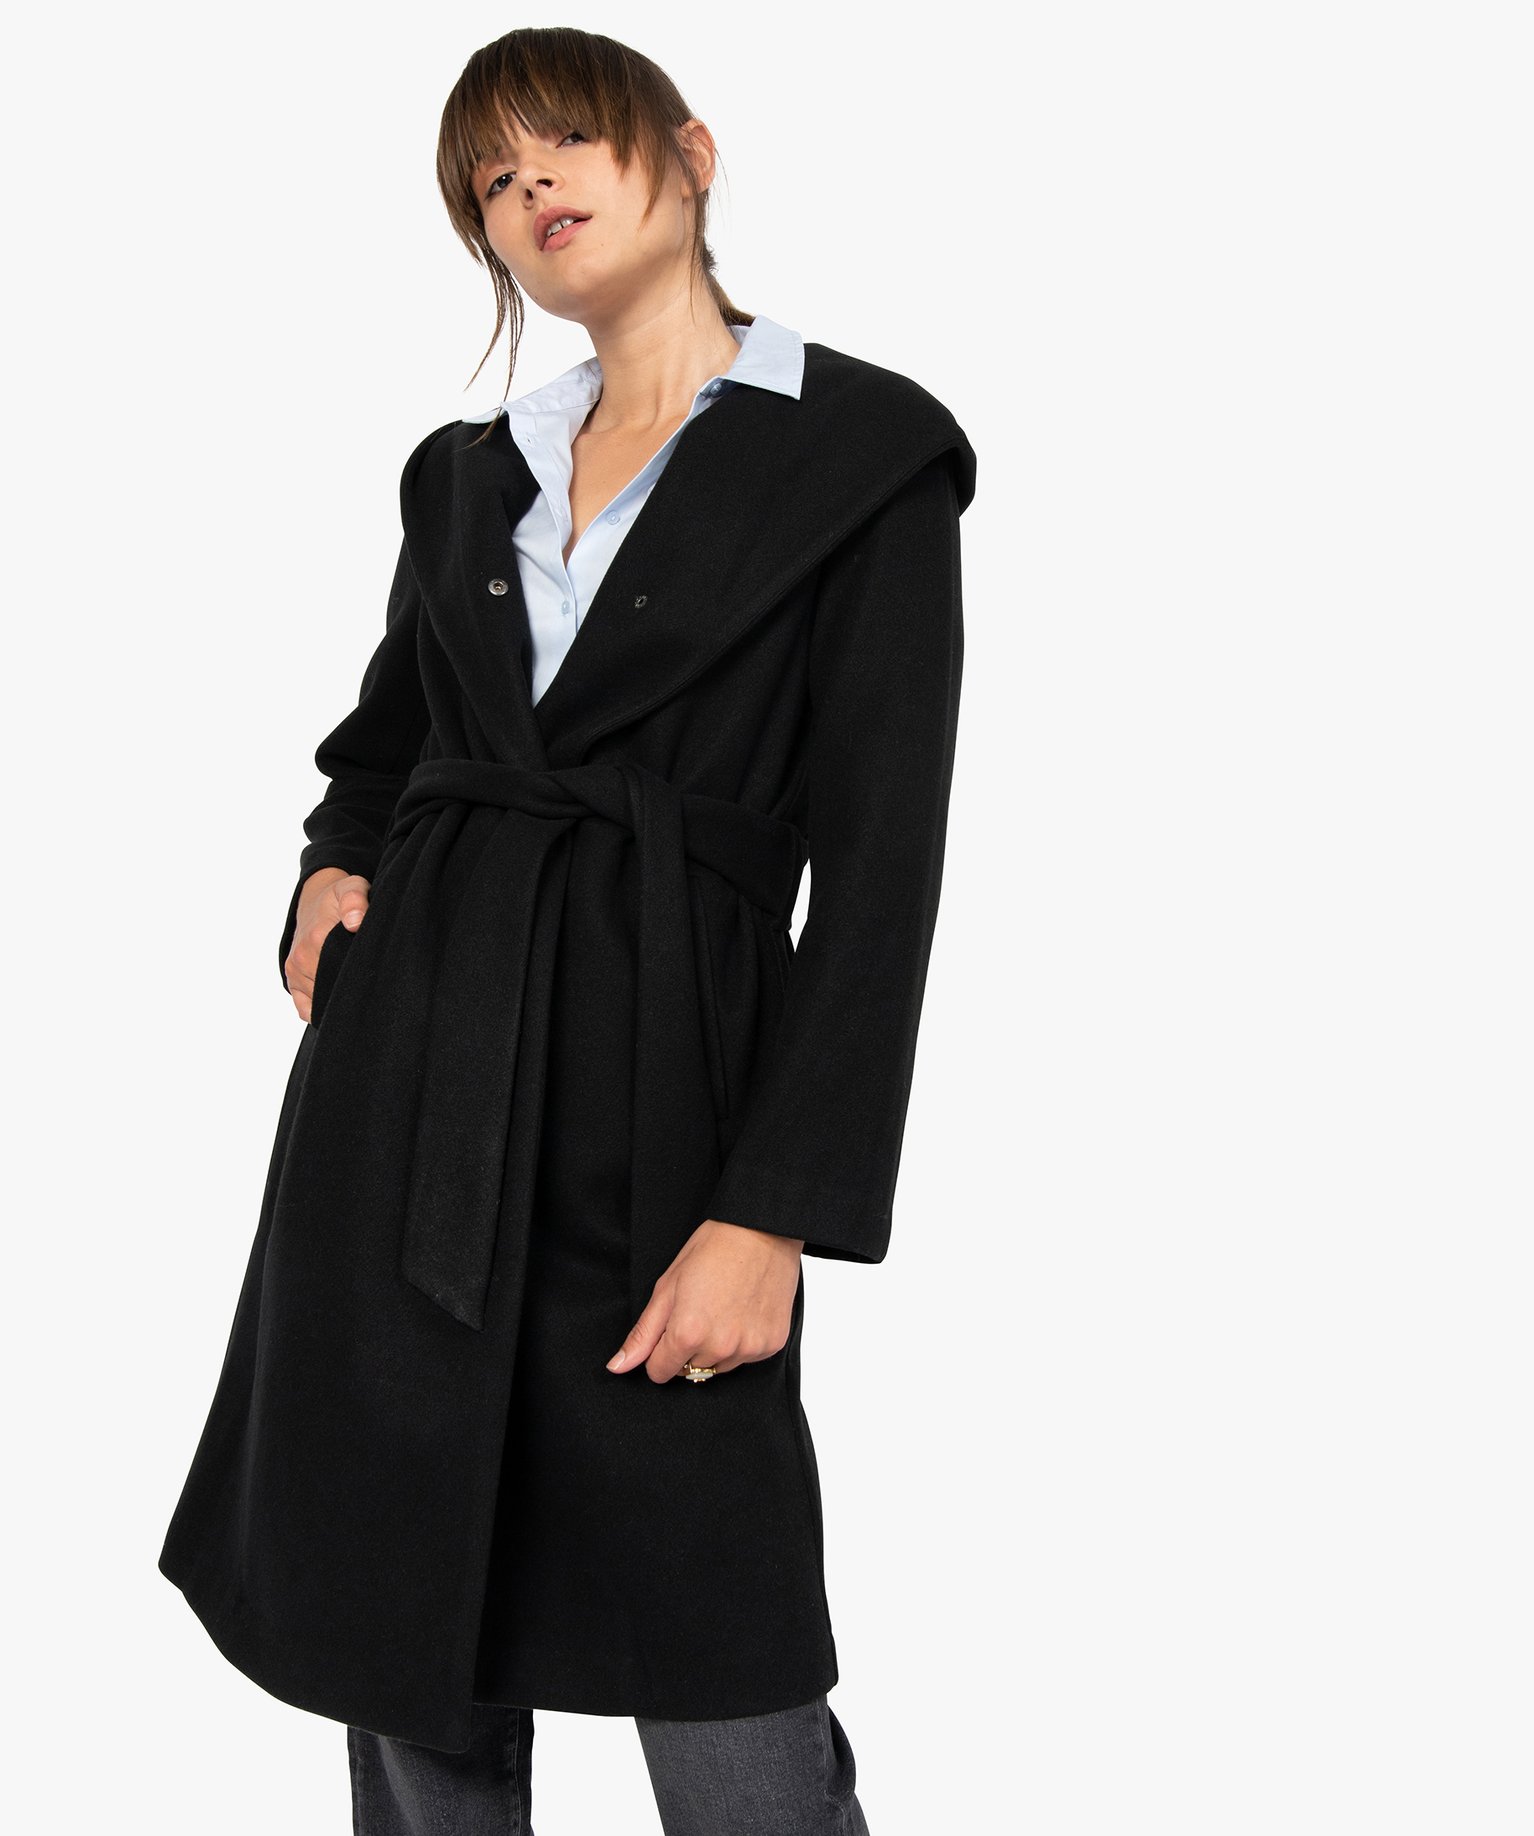 manteau femme avec grand col